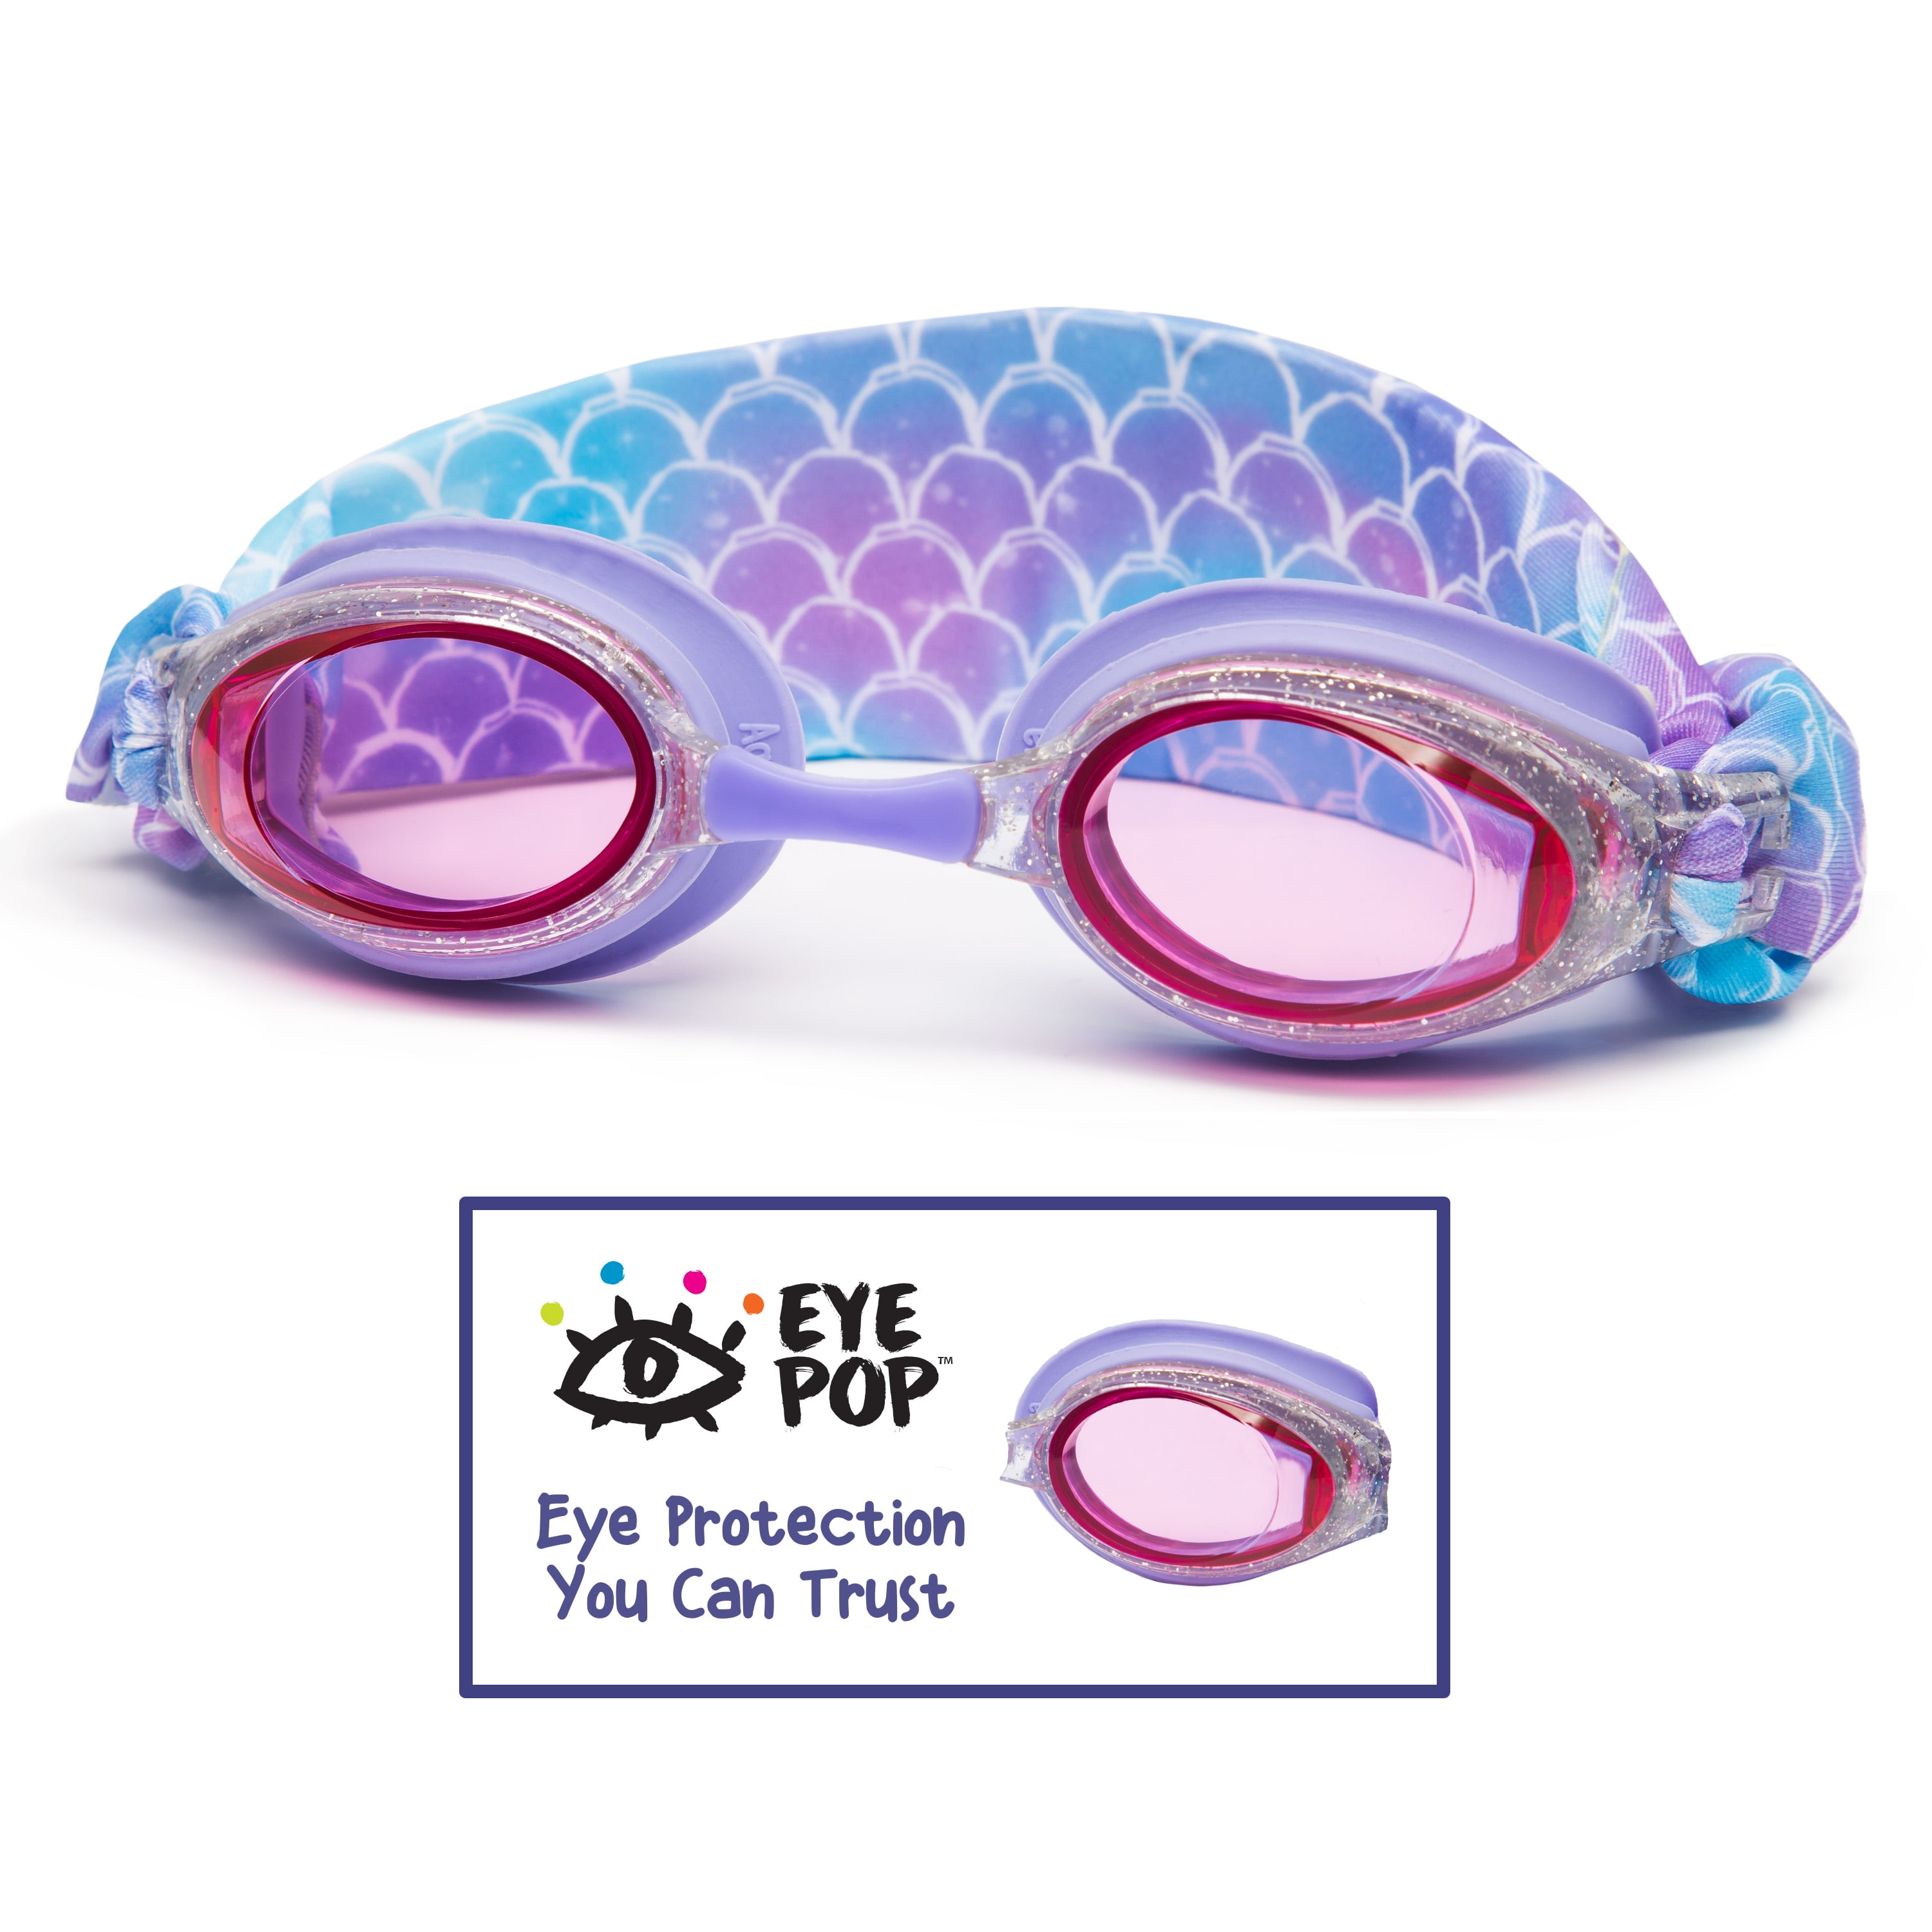 Institut galdeblæren Almindeligt Eye Pop Purple and Blue Swimming Sport Goggles - Walmart.com